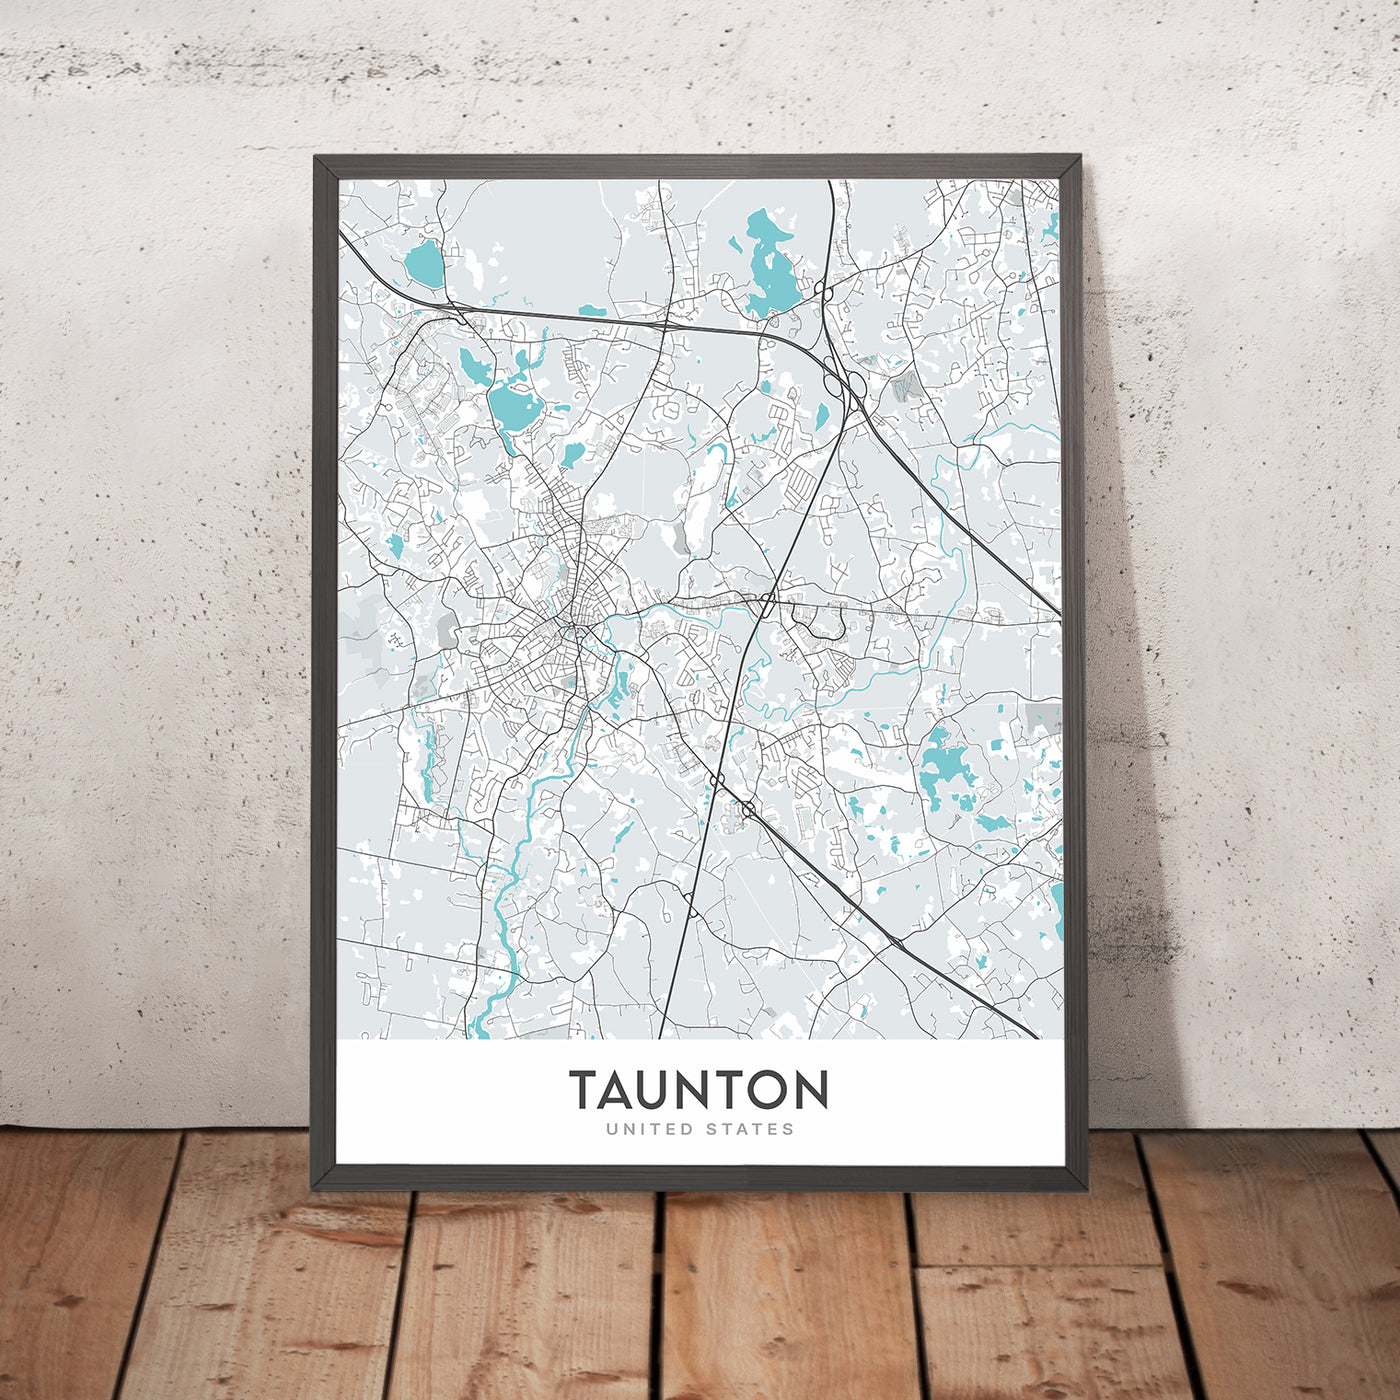 Modern City Map of Taunton, MA: Downtown, Old Colony Historical Society, Taunton Green, Taunton Public Library, Whittenton